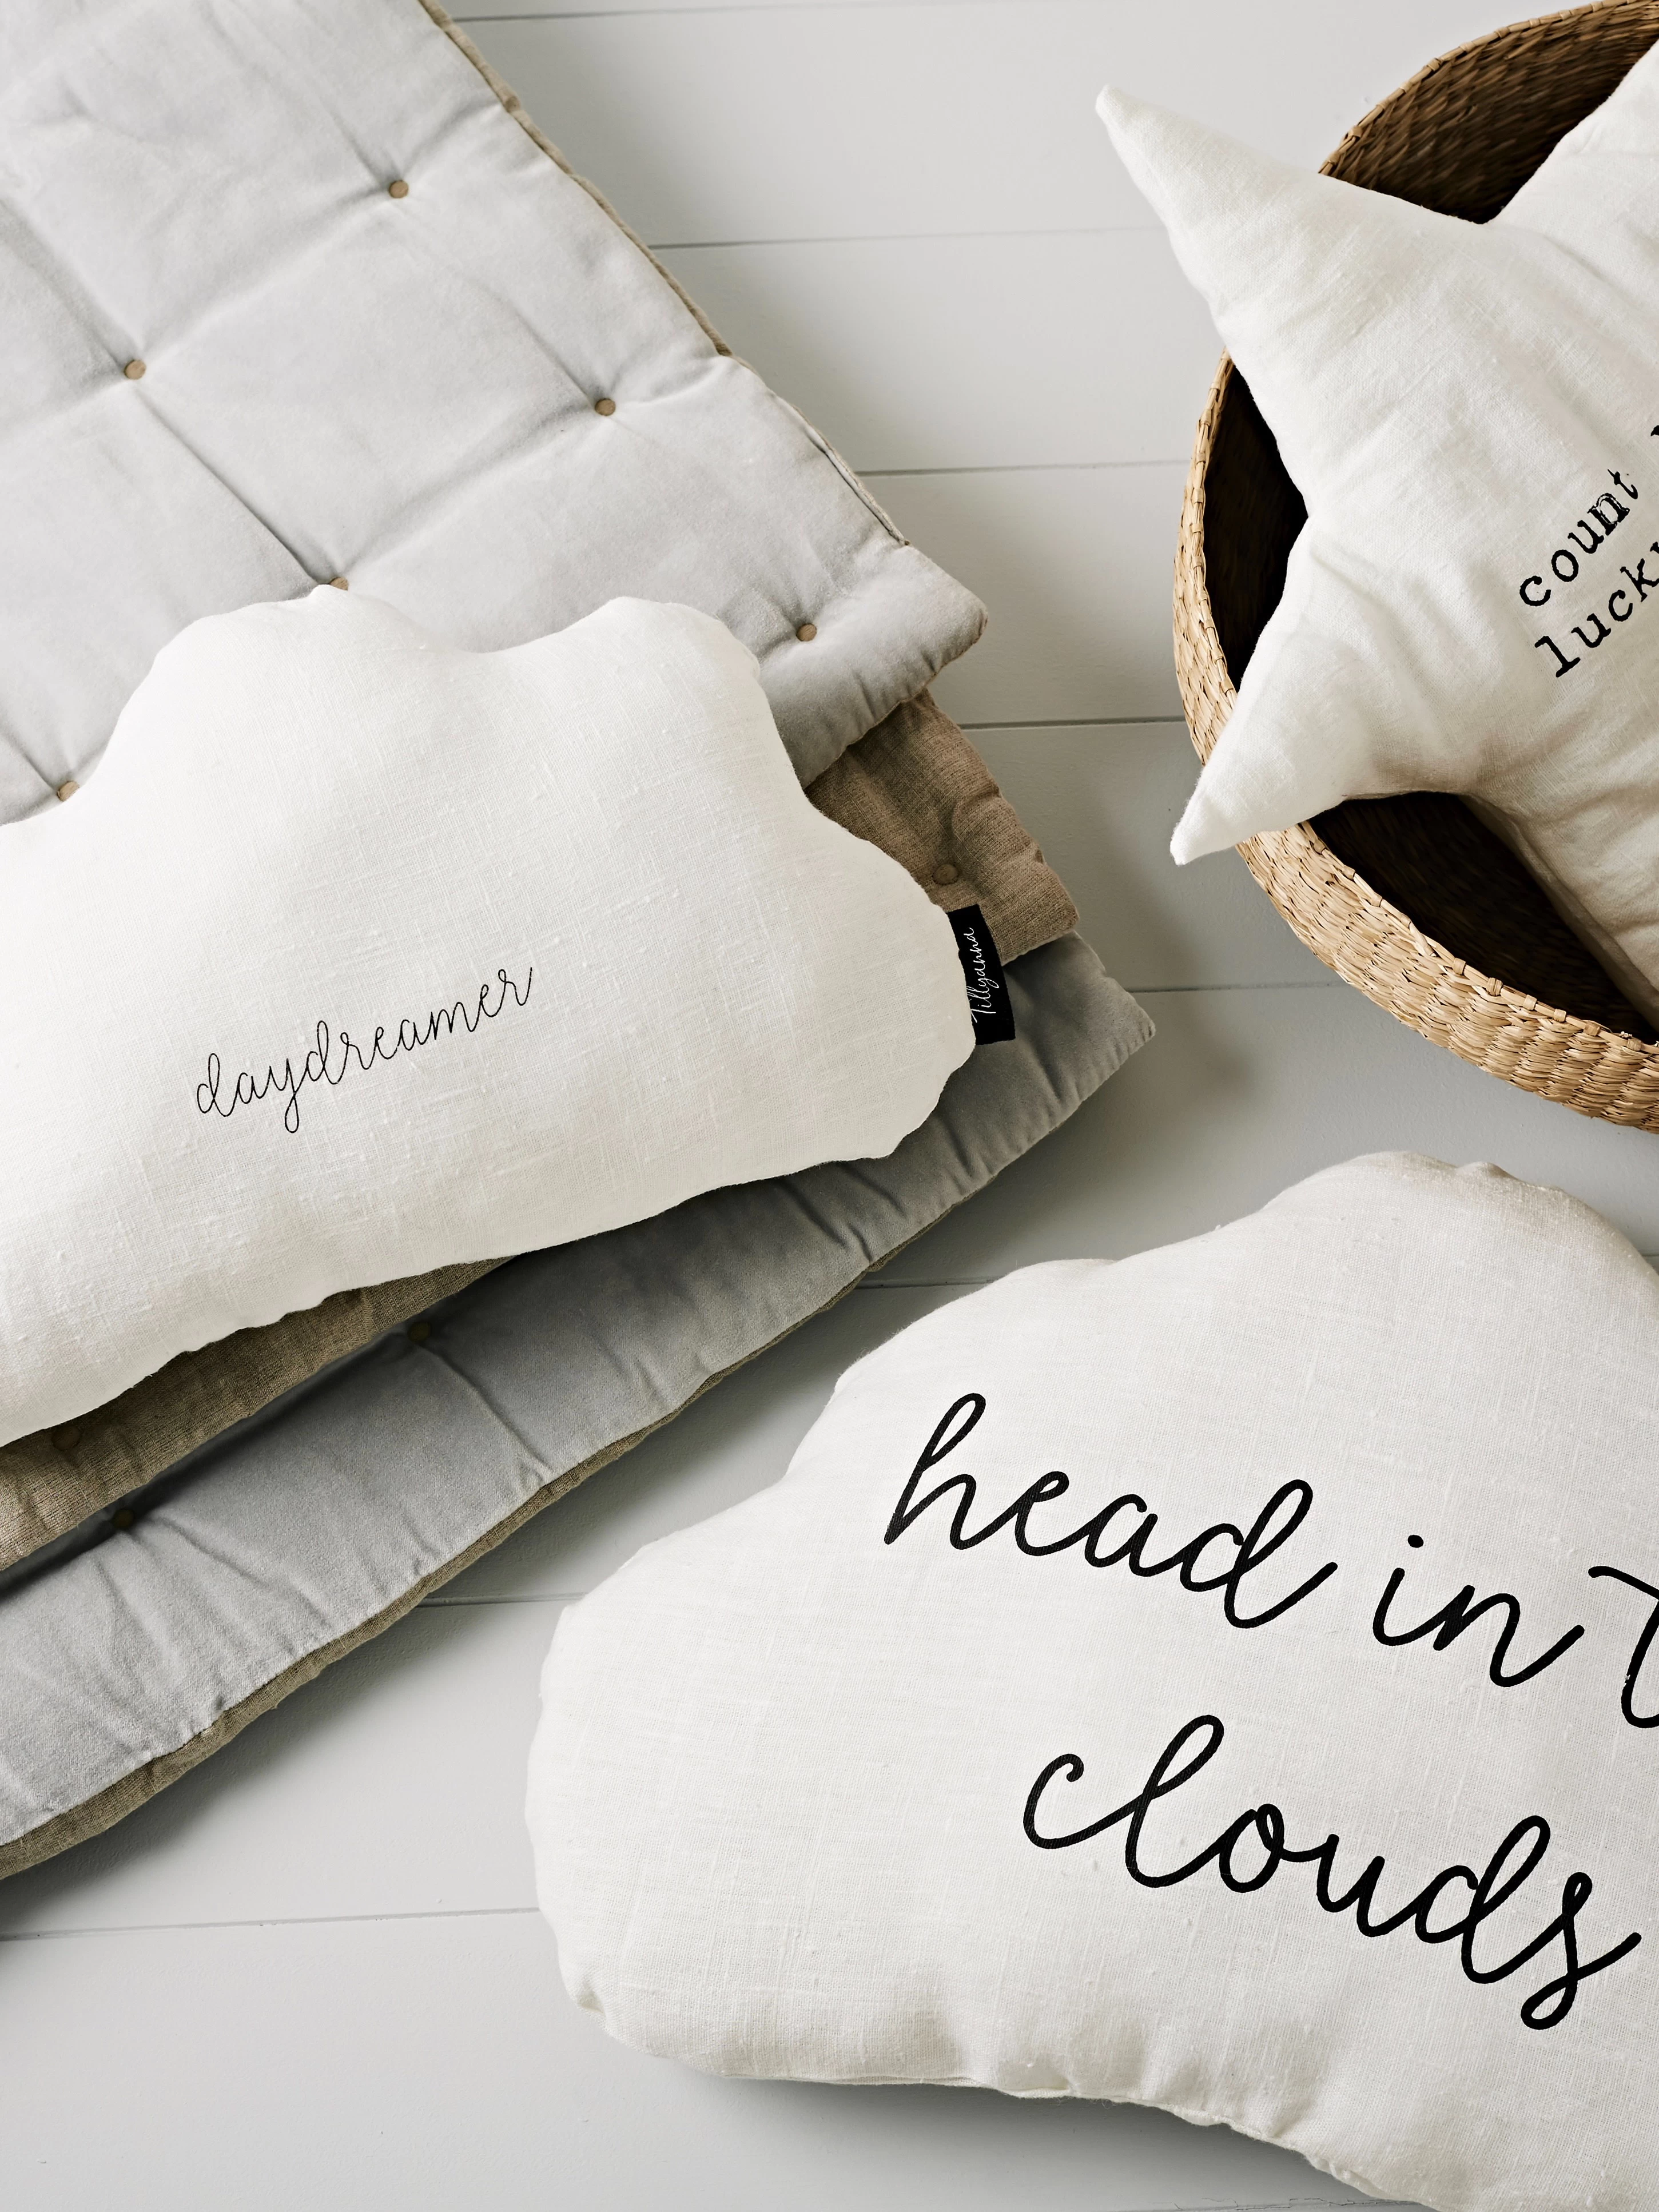 Cloud shaped linen cushions